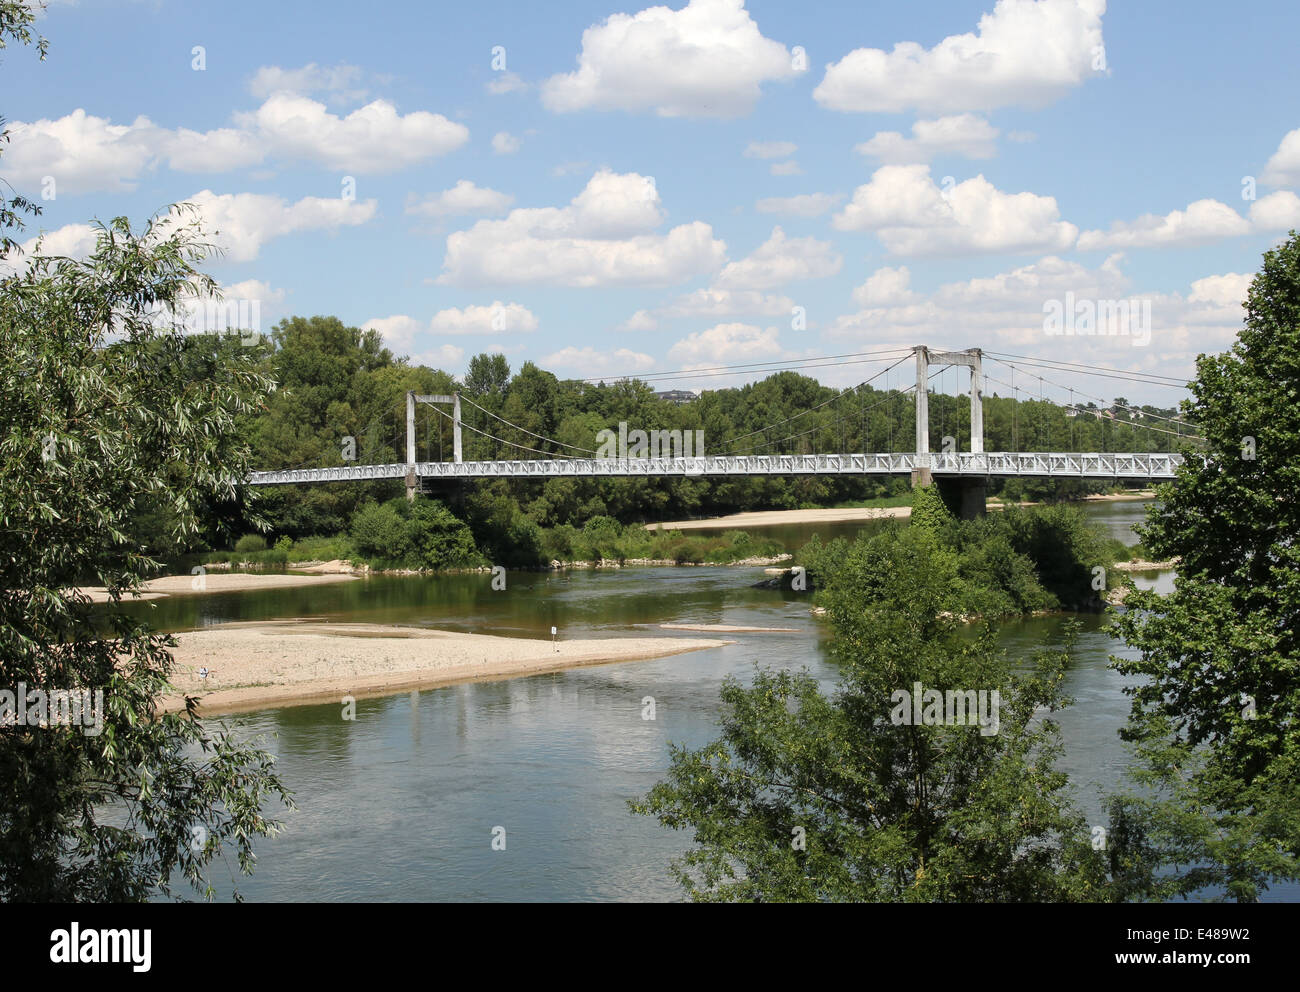 Pont de Saint Symphorien Hängebrücke über Fluss Loire Touren Frankreich Juli 2014 Stockfoto